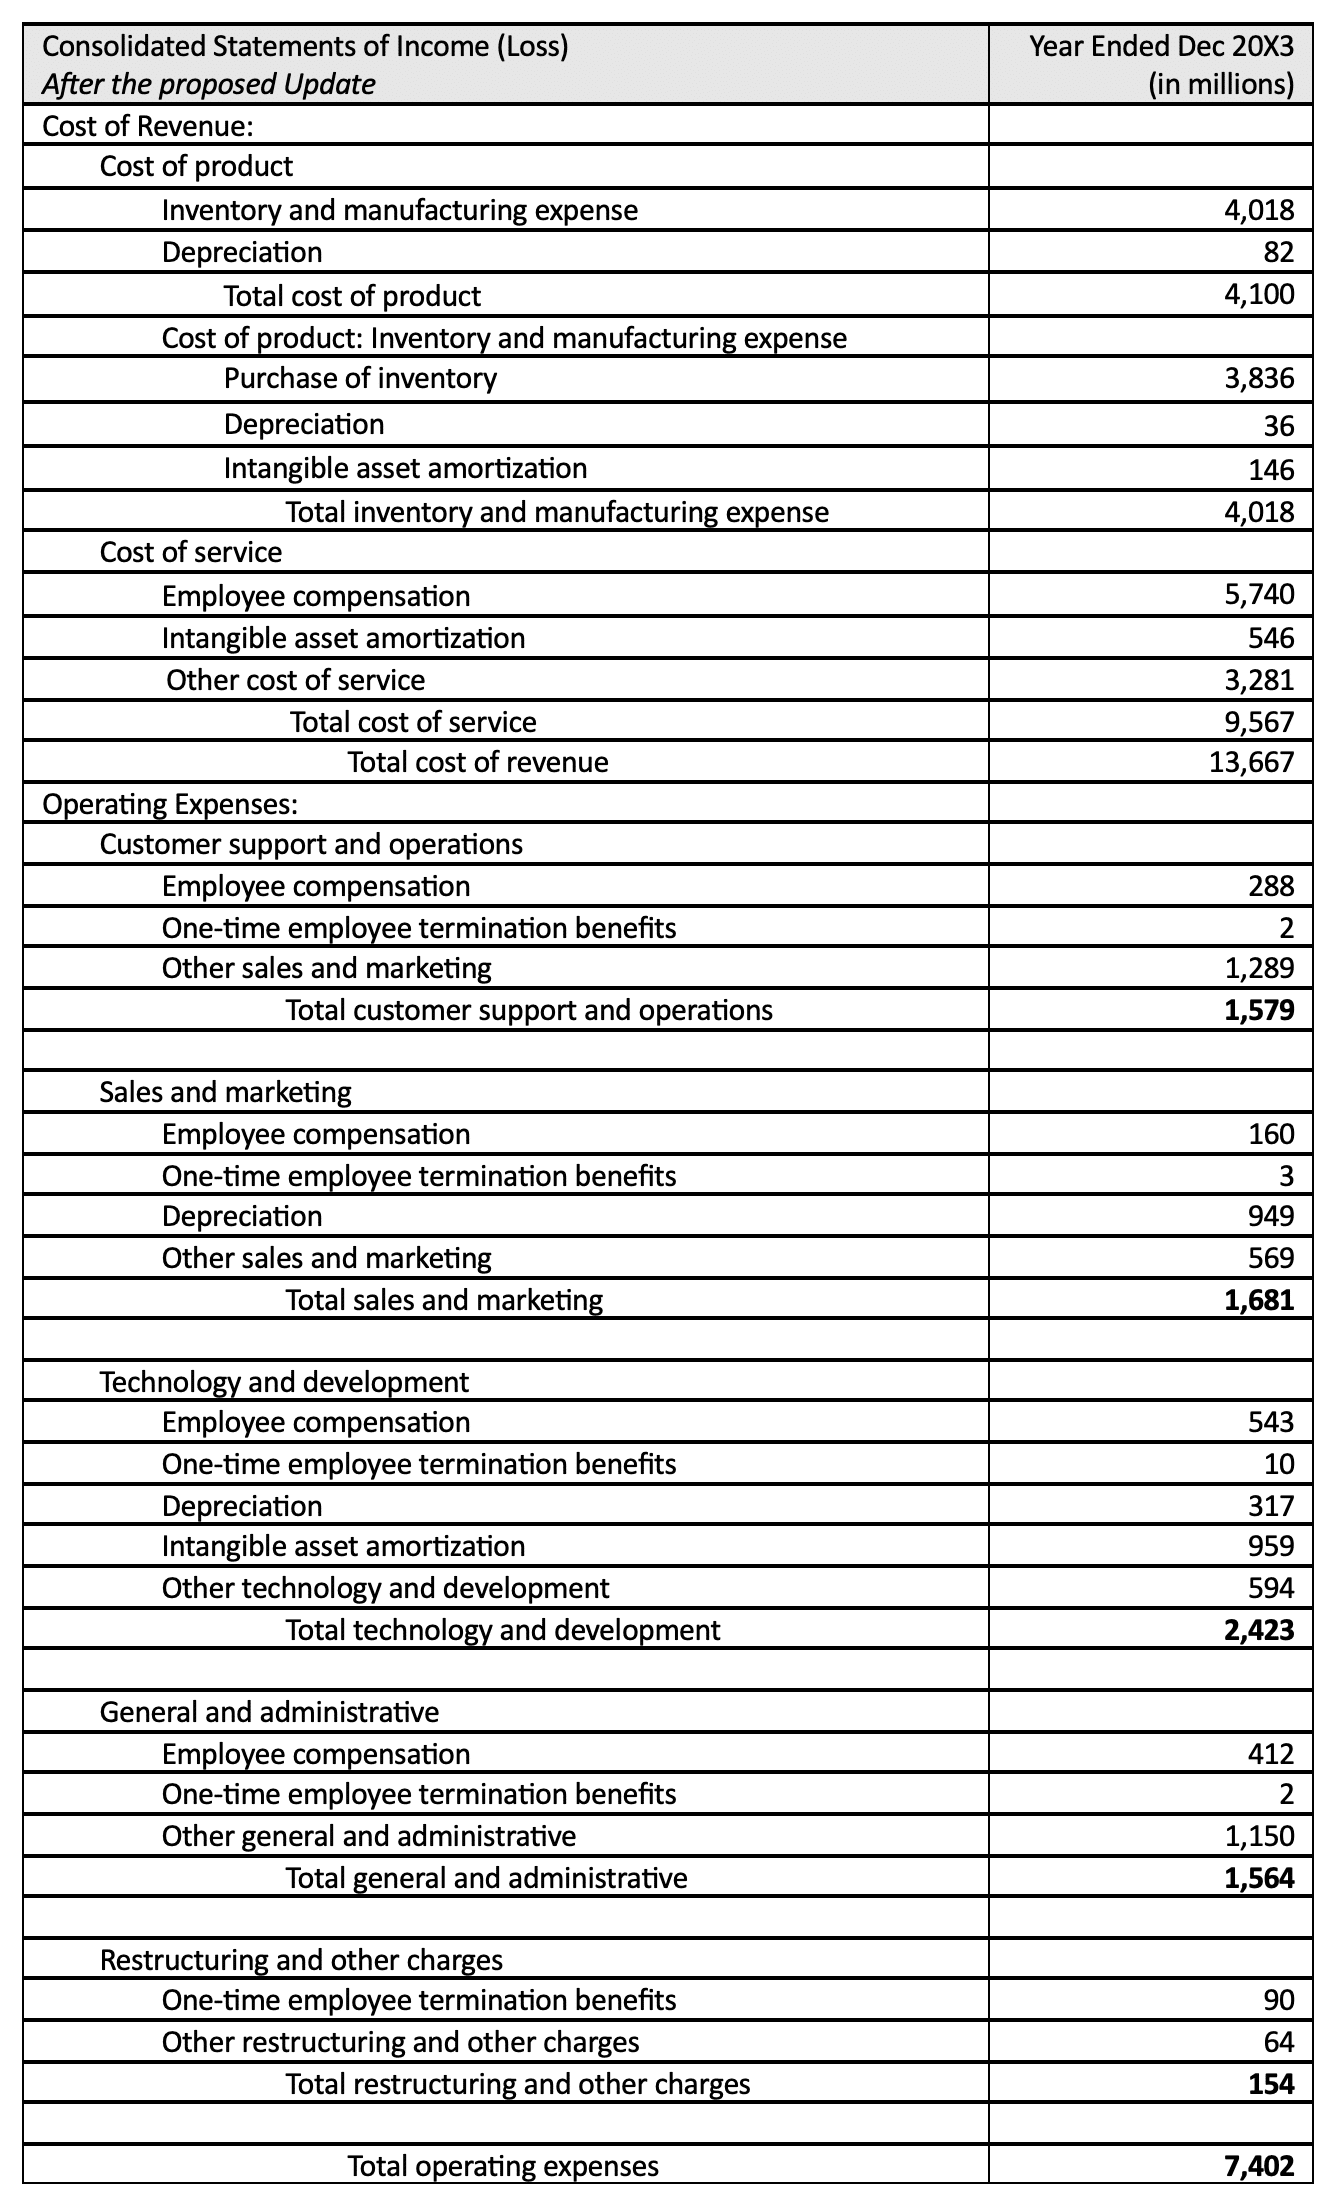 ASU - Expense Disaggregation Table 3